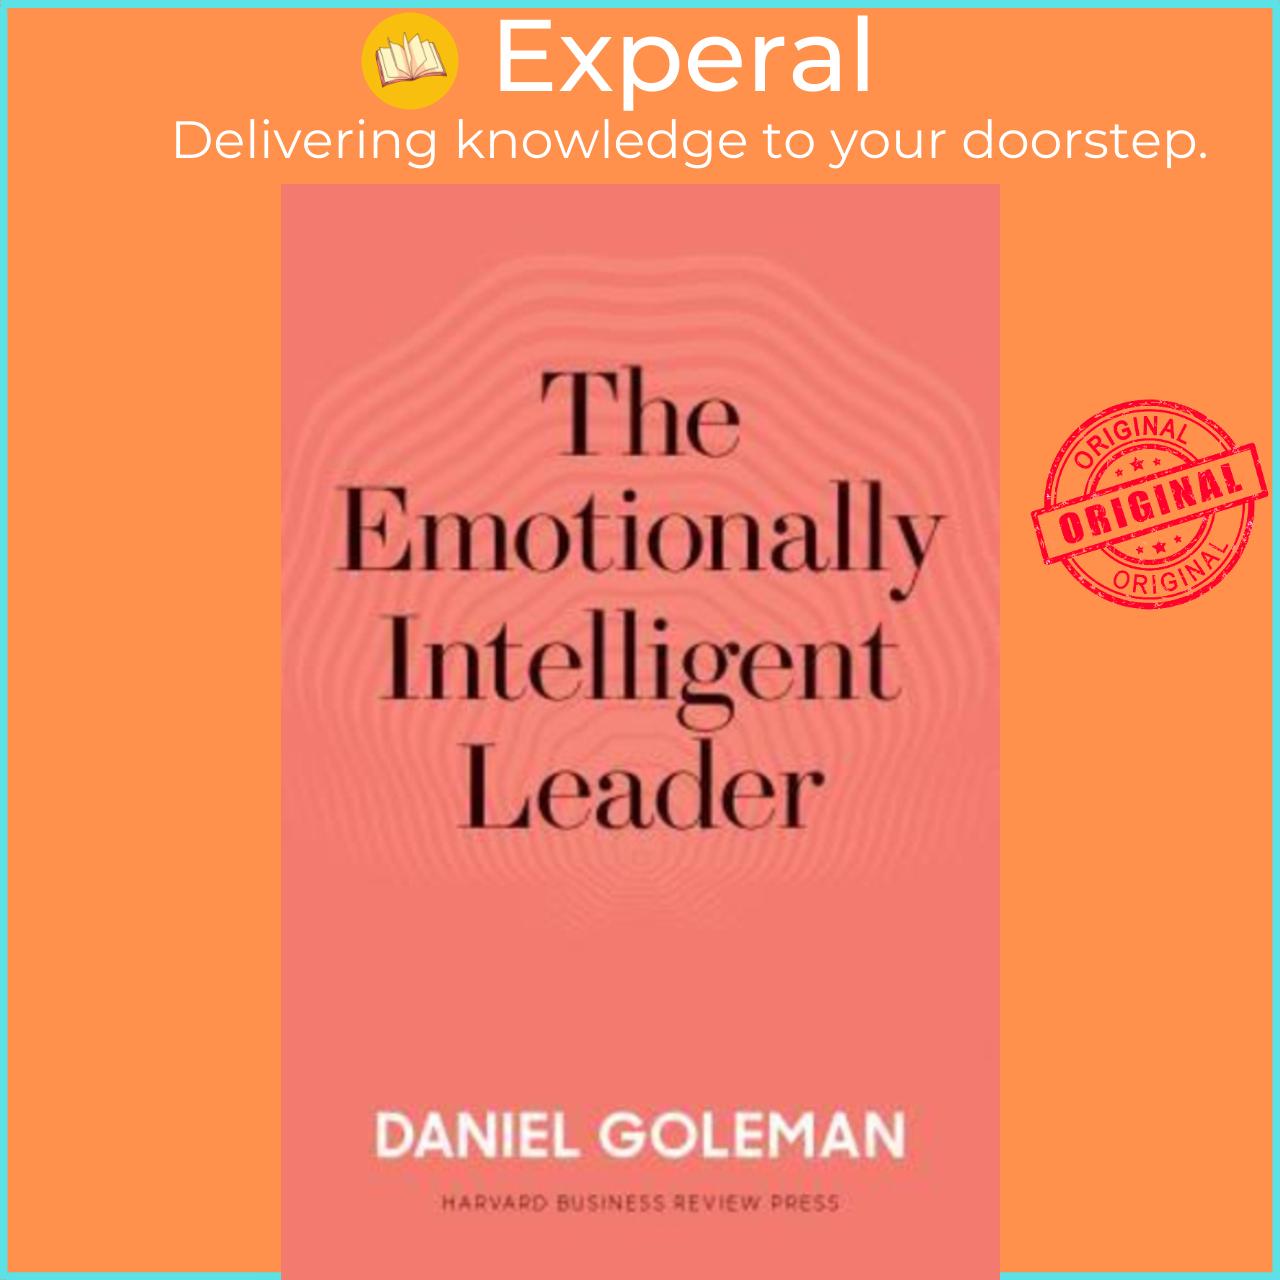 Hình ảnh Sách - The Emotionally Intelligent Leader by Daniel Goleman (US edition, hardcover)